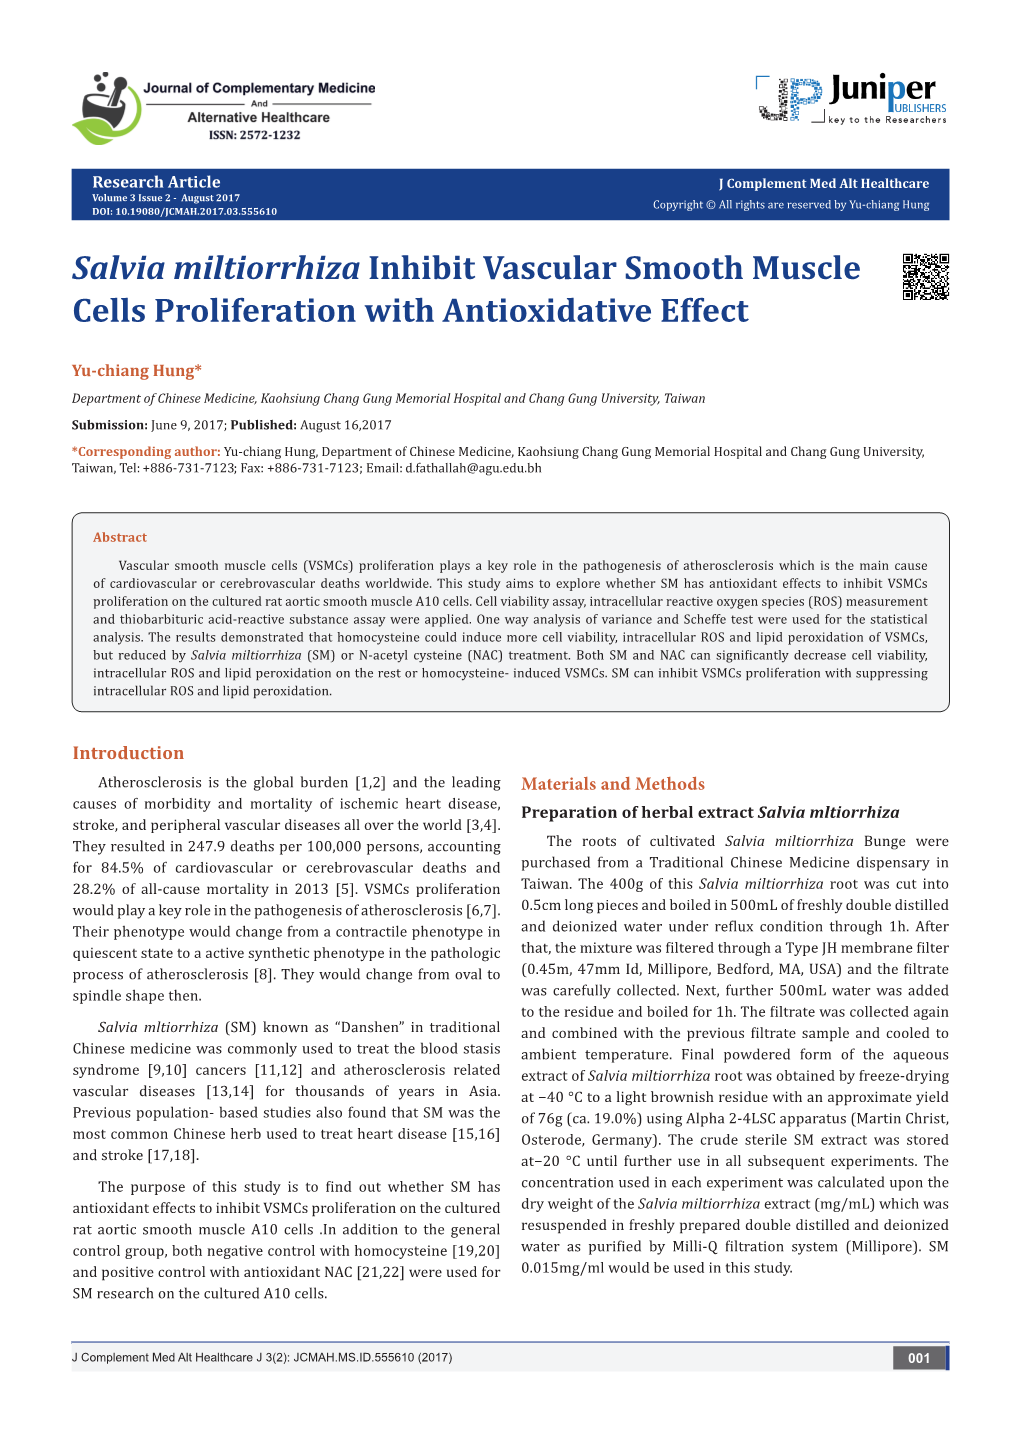 Salvia Miltiorrhiza Inhibit Vascular Smooth Muscle Cells Proliferation with Antioxidative Effect